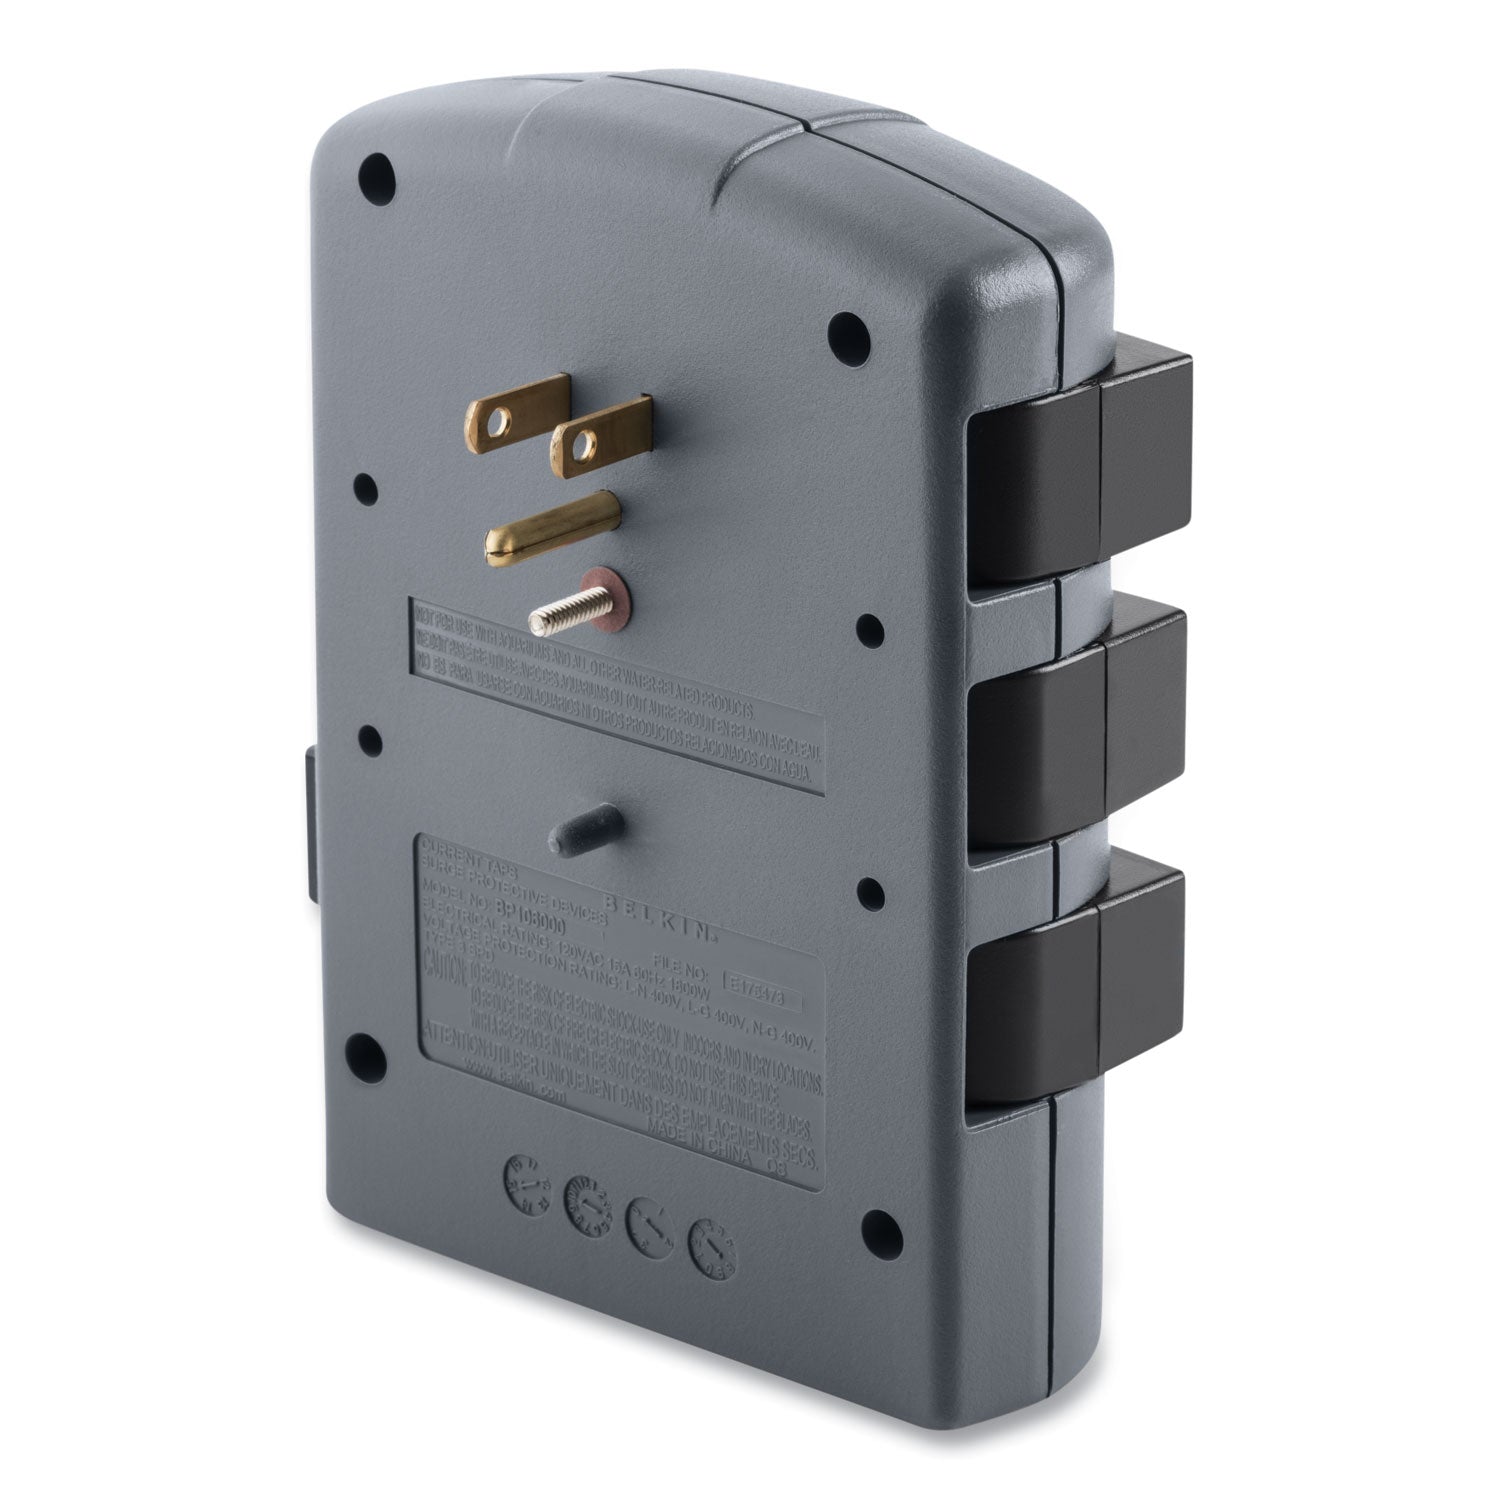 Pivot Plug Surge Protector, 6 AC Outlets, 1,080 J, Gray - 